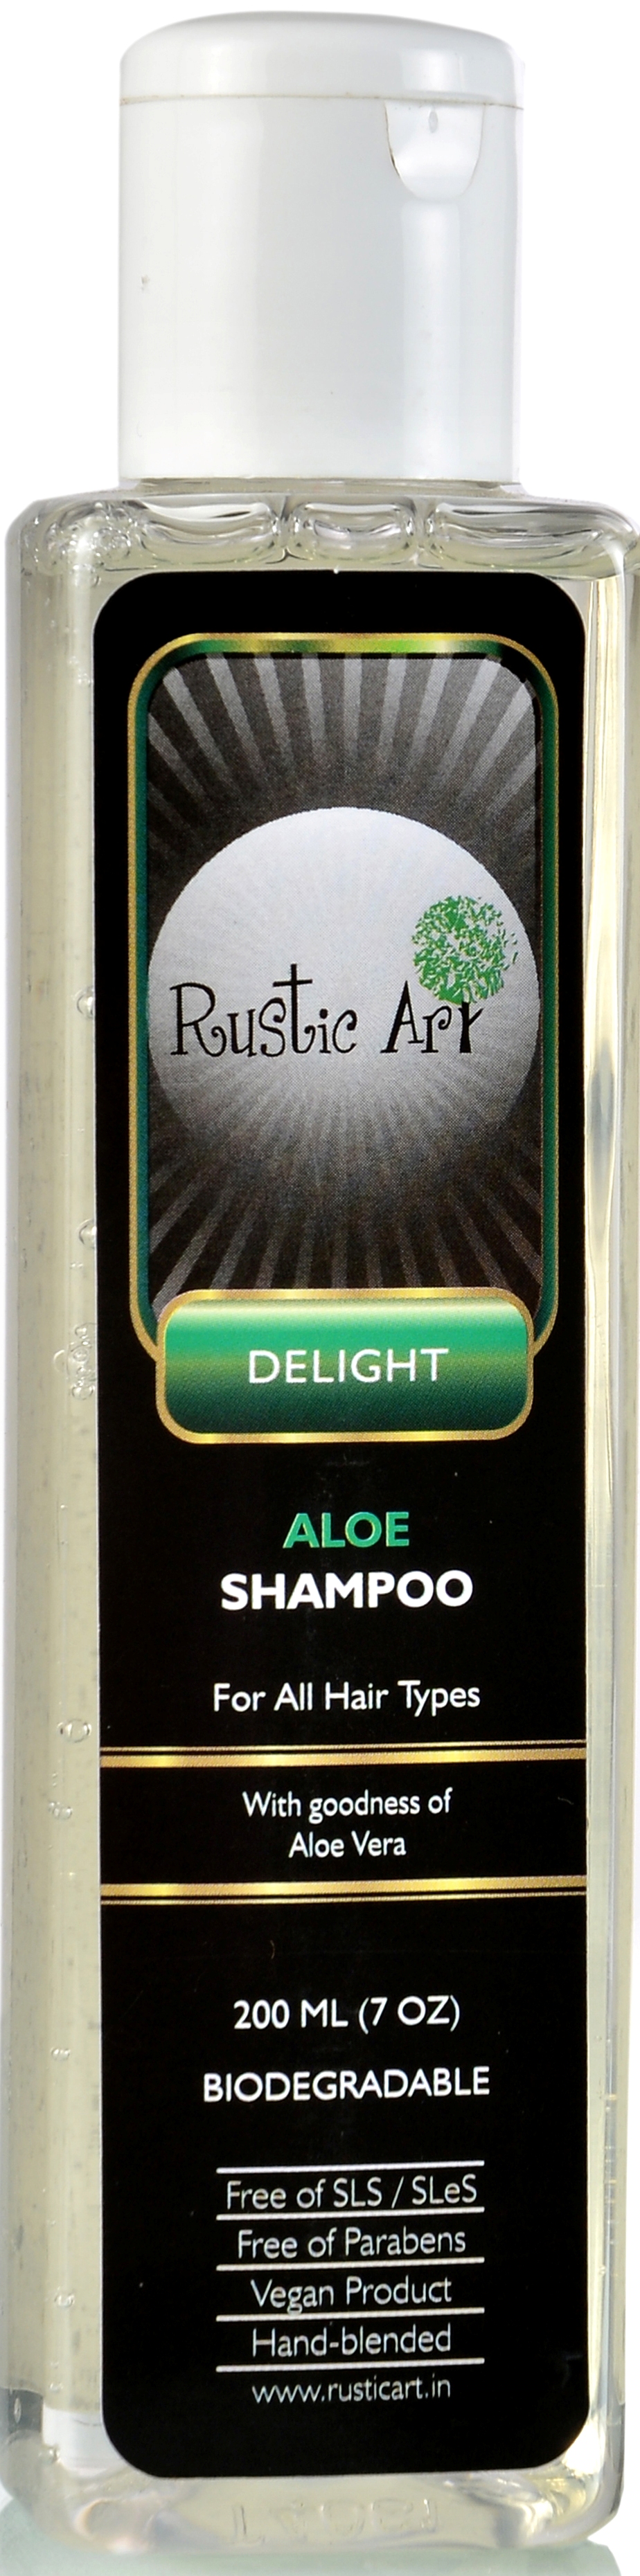 Rustic Art Biodegradable Aloe Shampoo